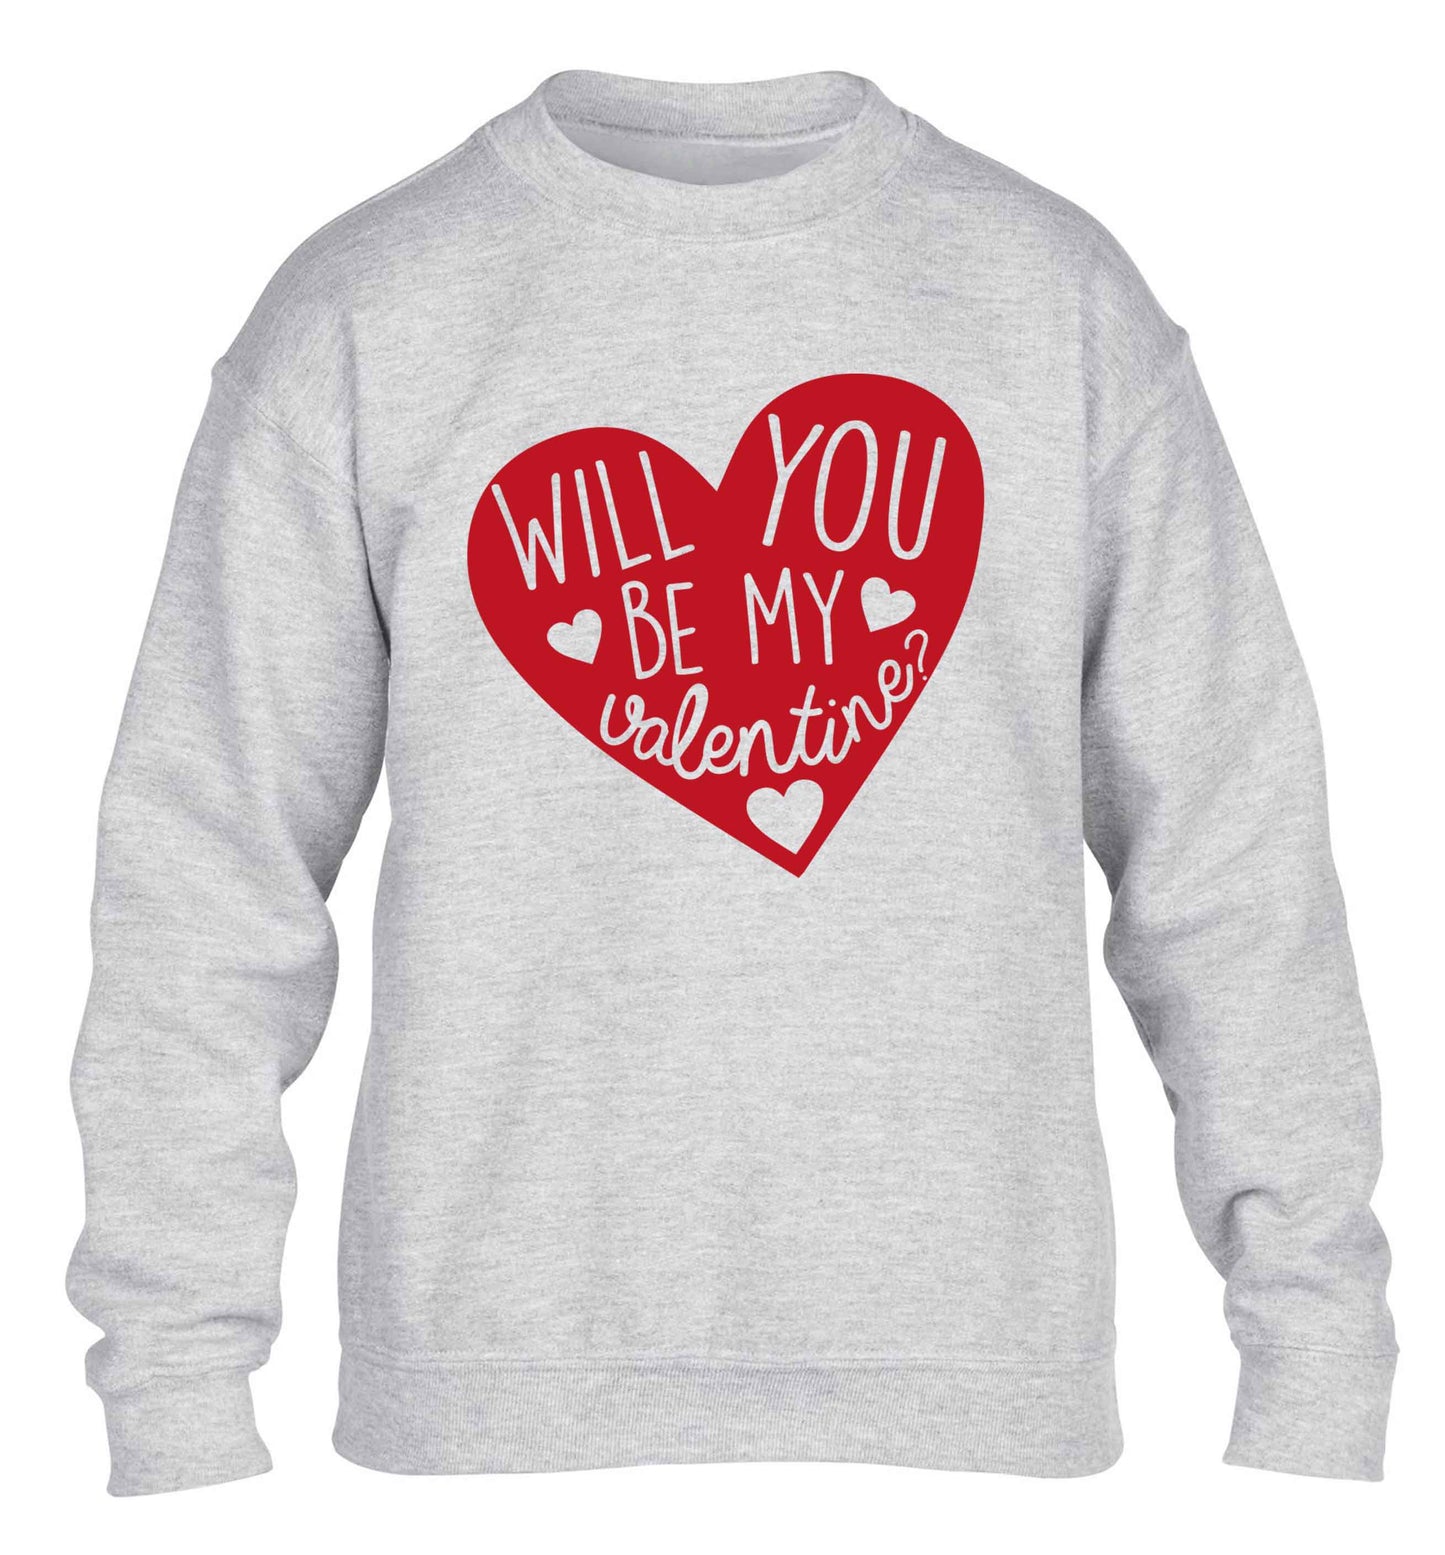 Will you be my valentine? children's grey sweater 12-13 Years